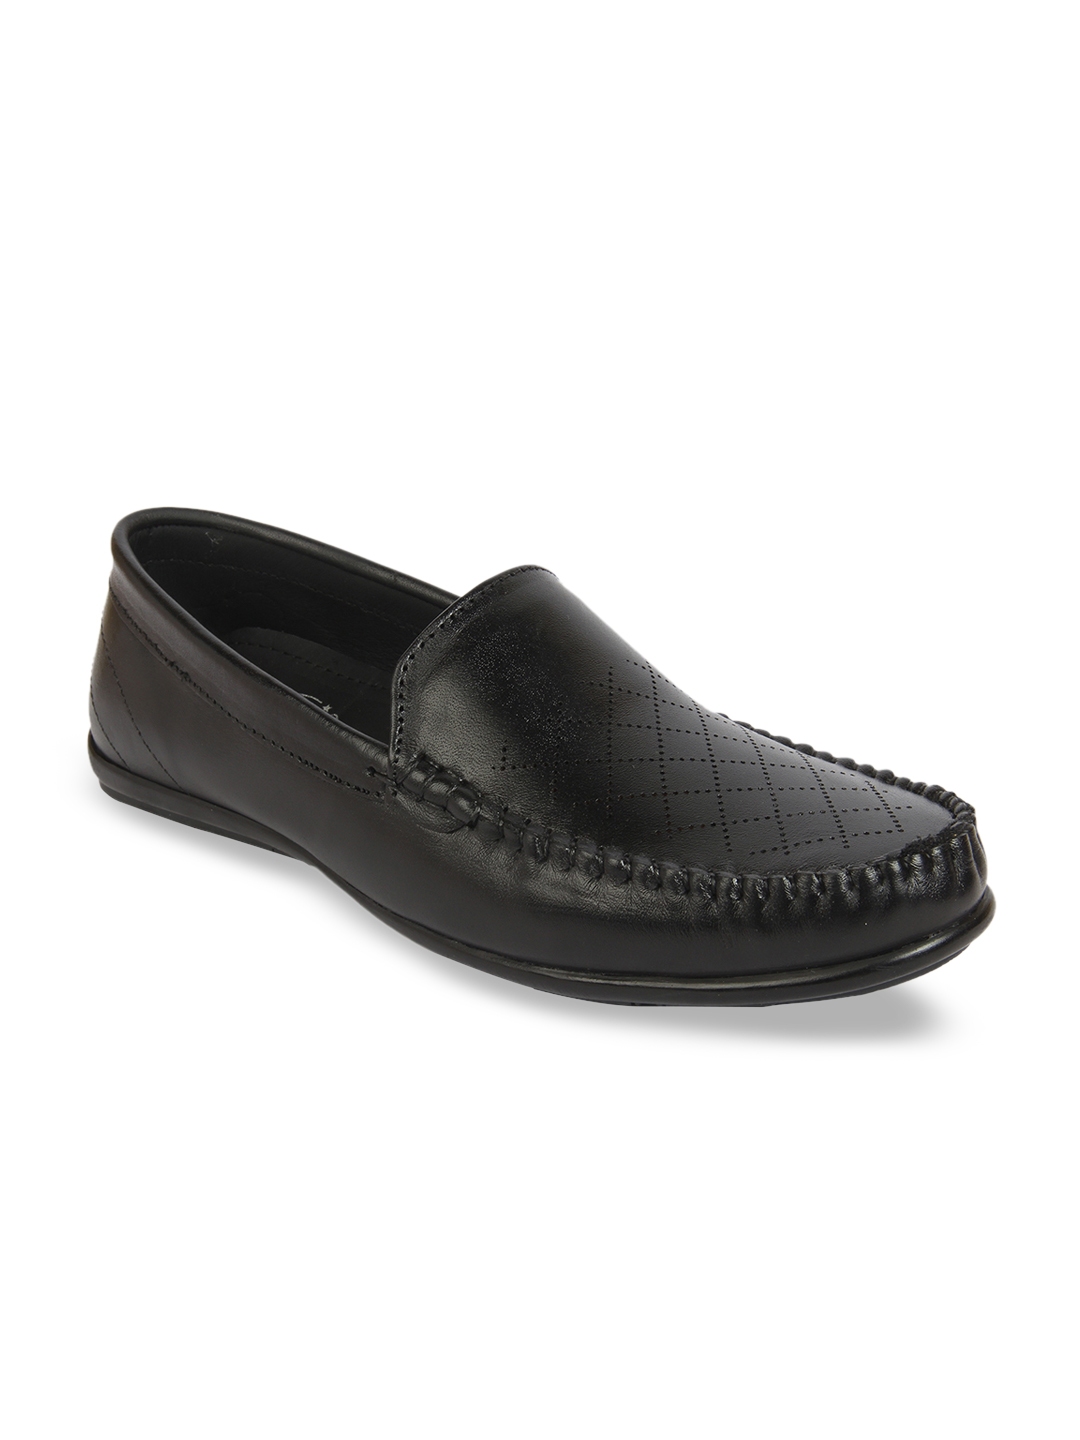 Buy Vardhra Men Black Loafers - Casual Shoes for Men 11220028 | Myntra